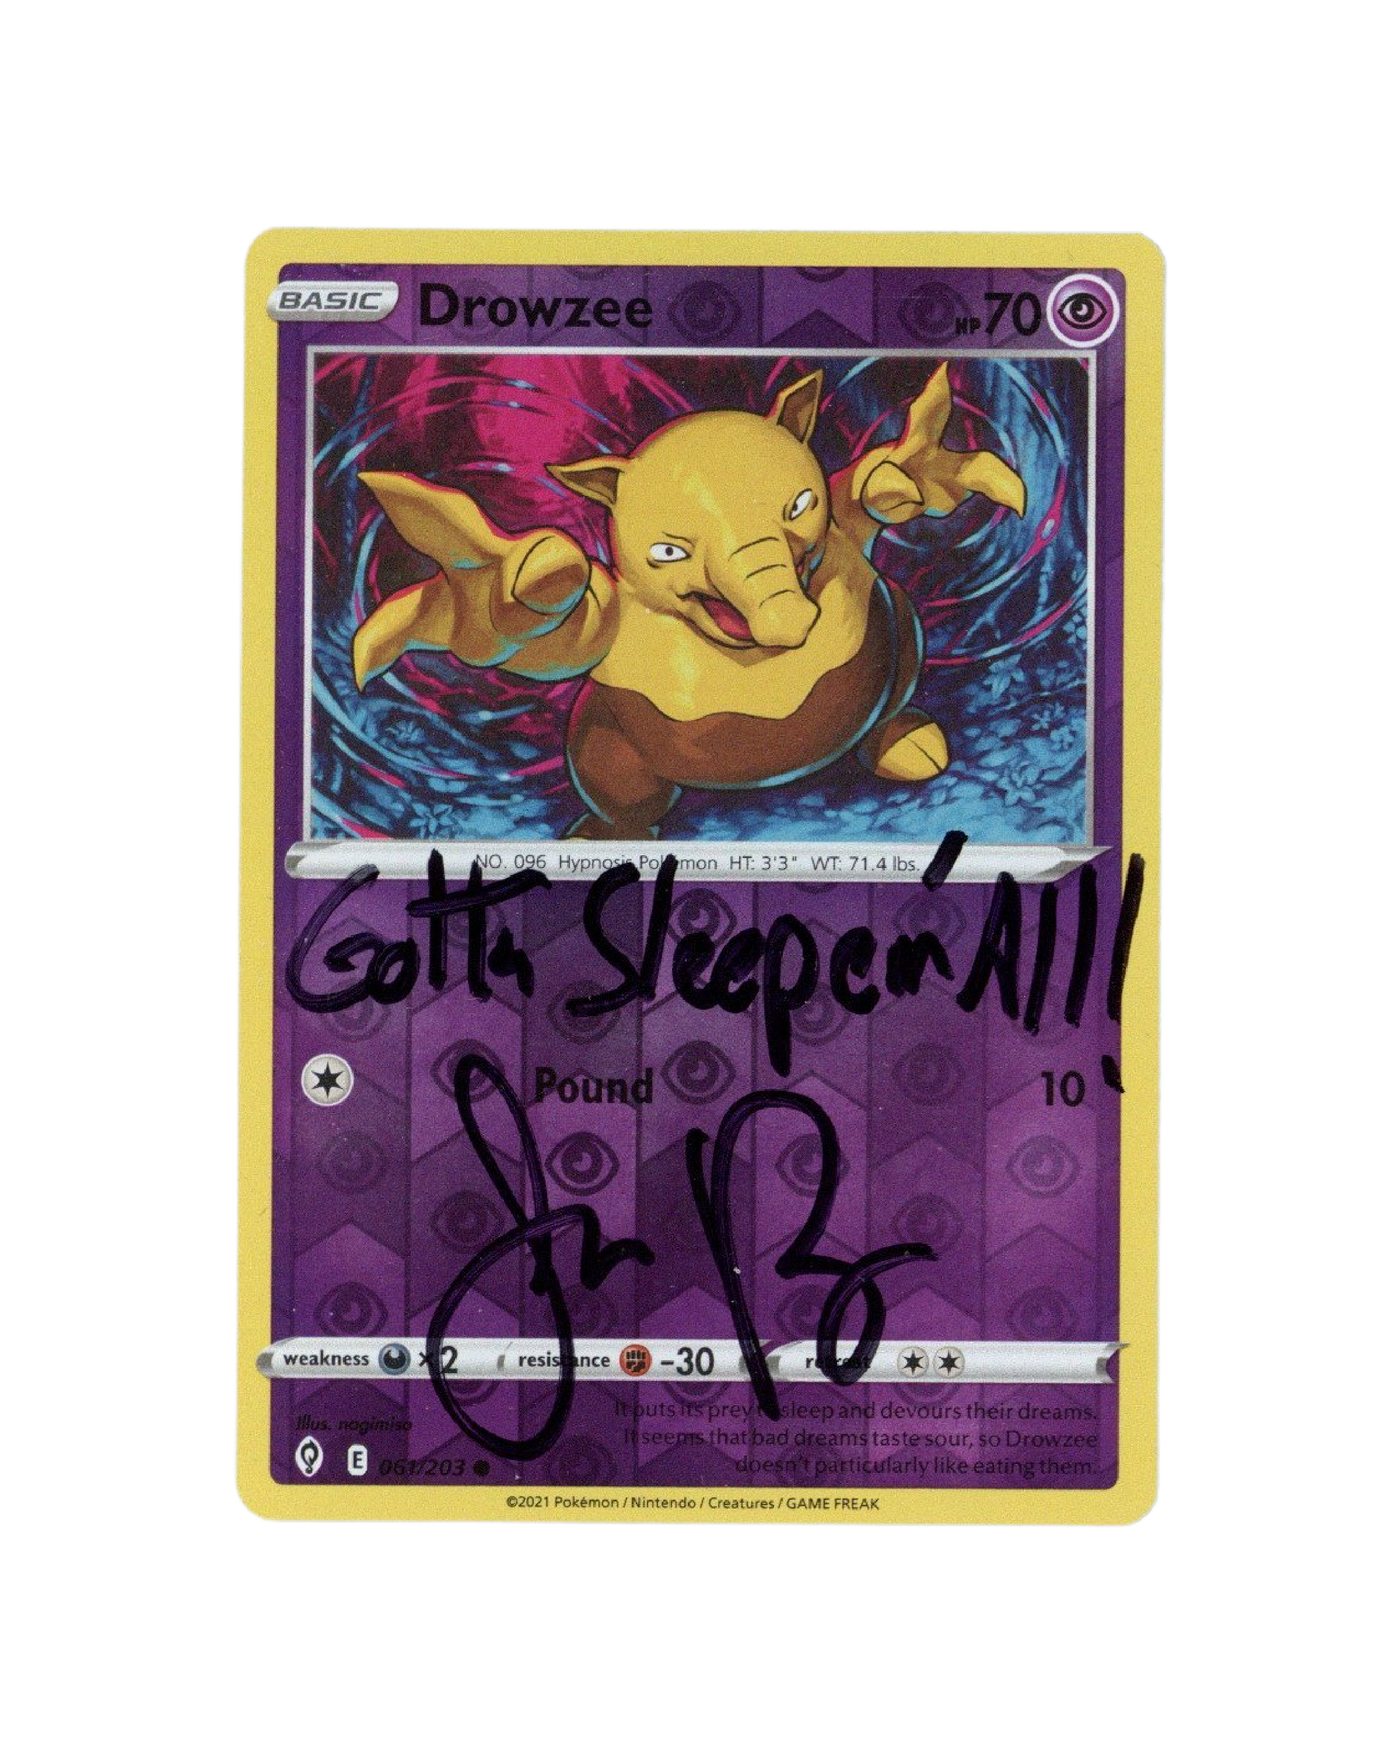 Jason Paige Signed Pokemon Drowzee Trading Card - Autographed Zobie COA